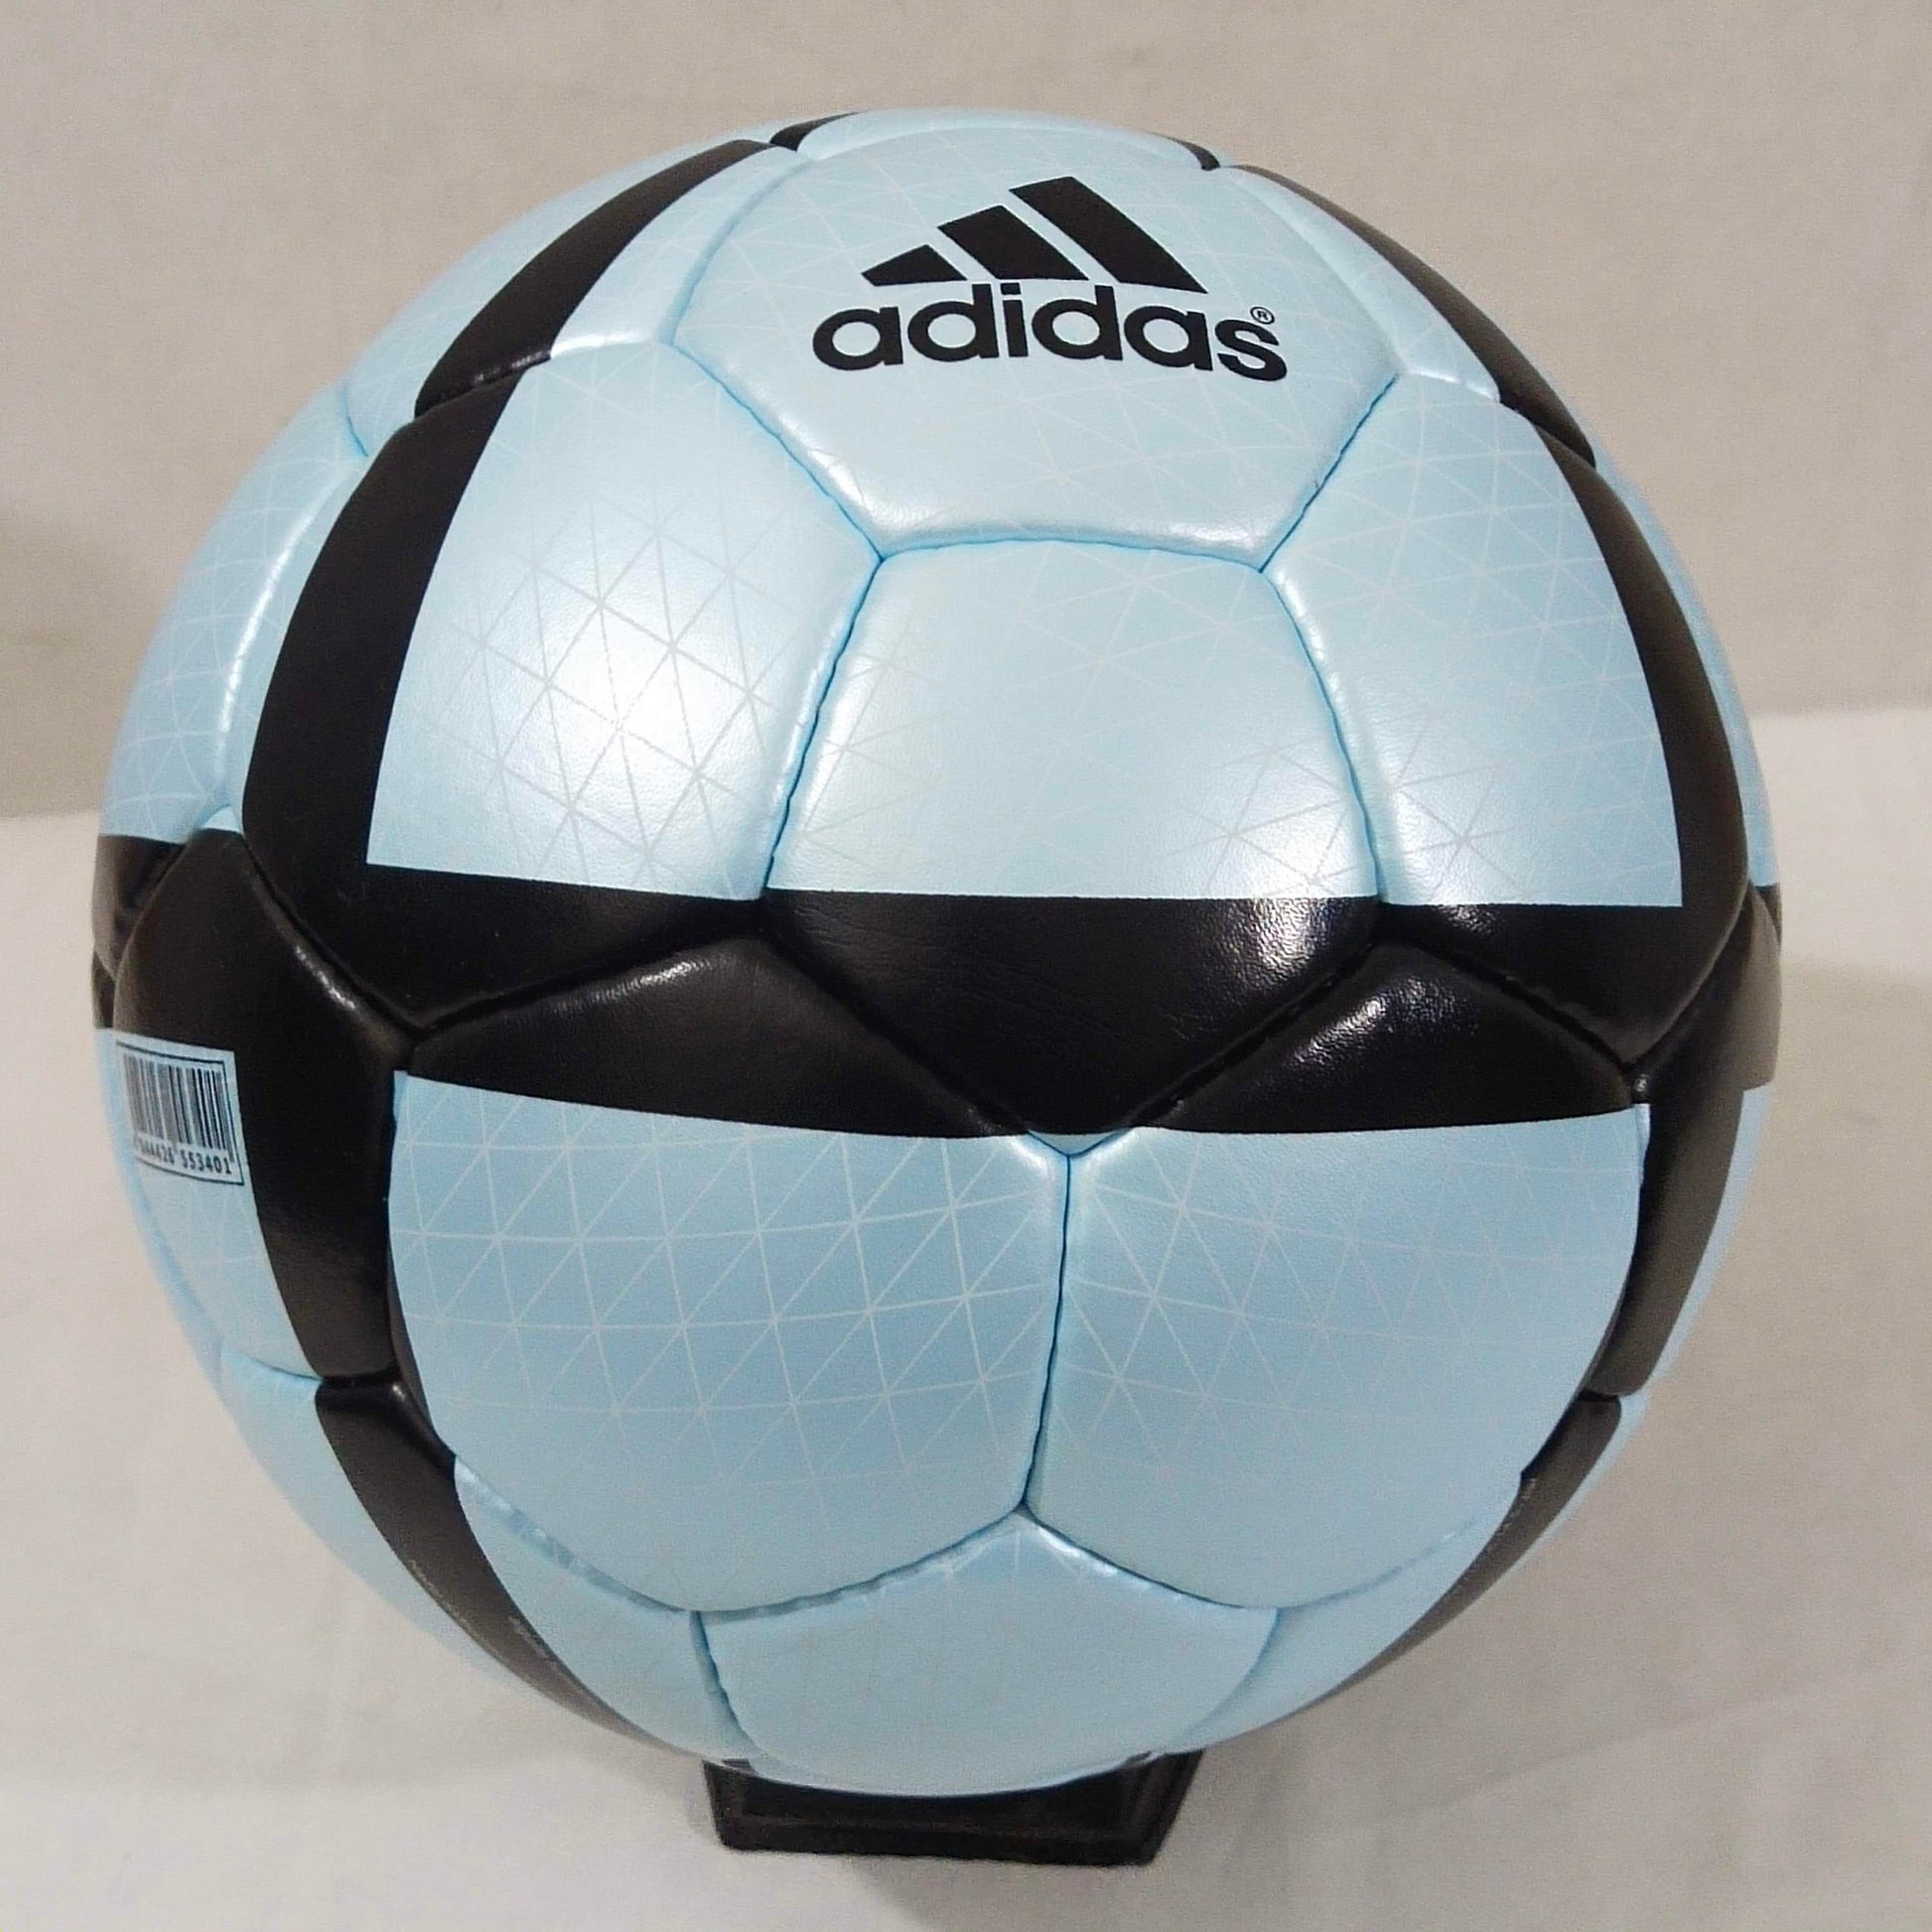 Adidas Roteiro Grand Stade | 2004 | UEFA Europa League | Official Match Ball | Size 5 05